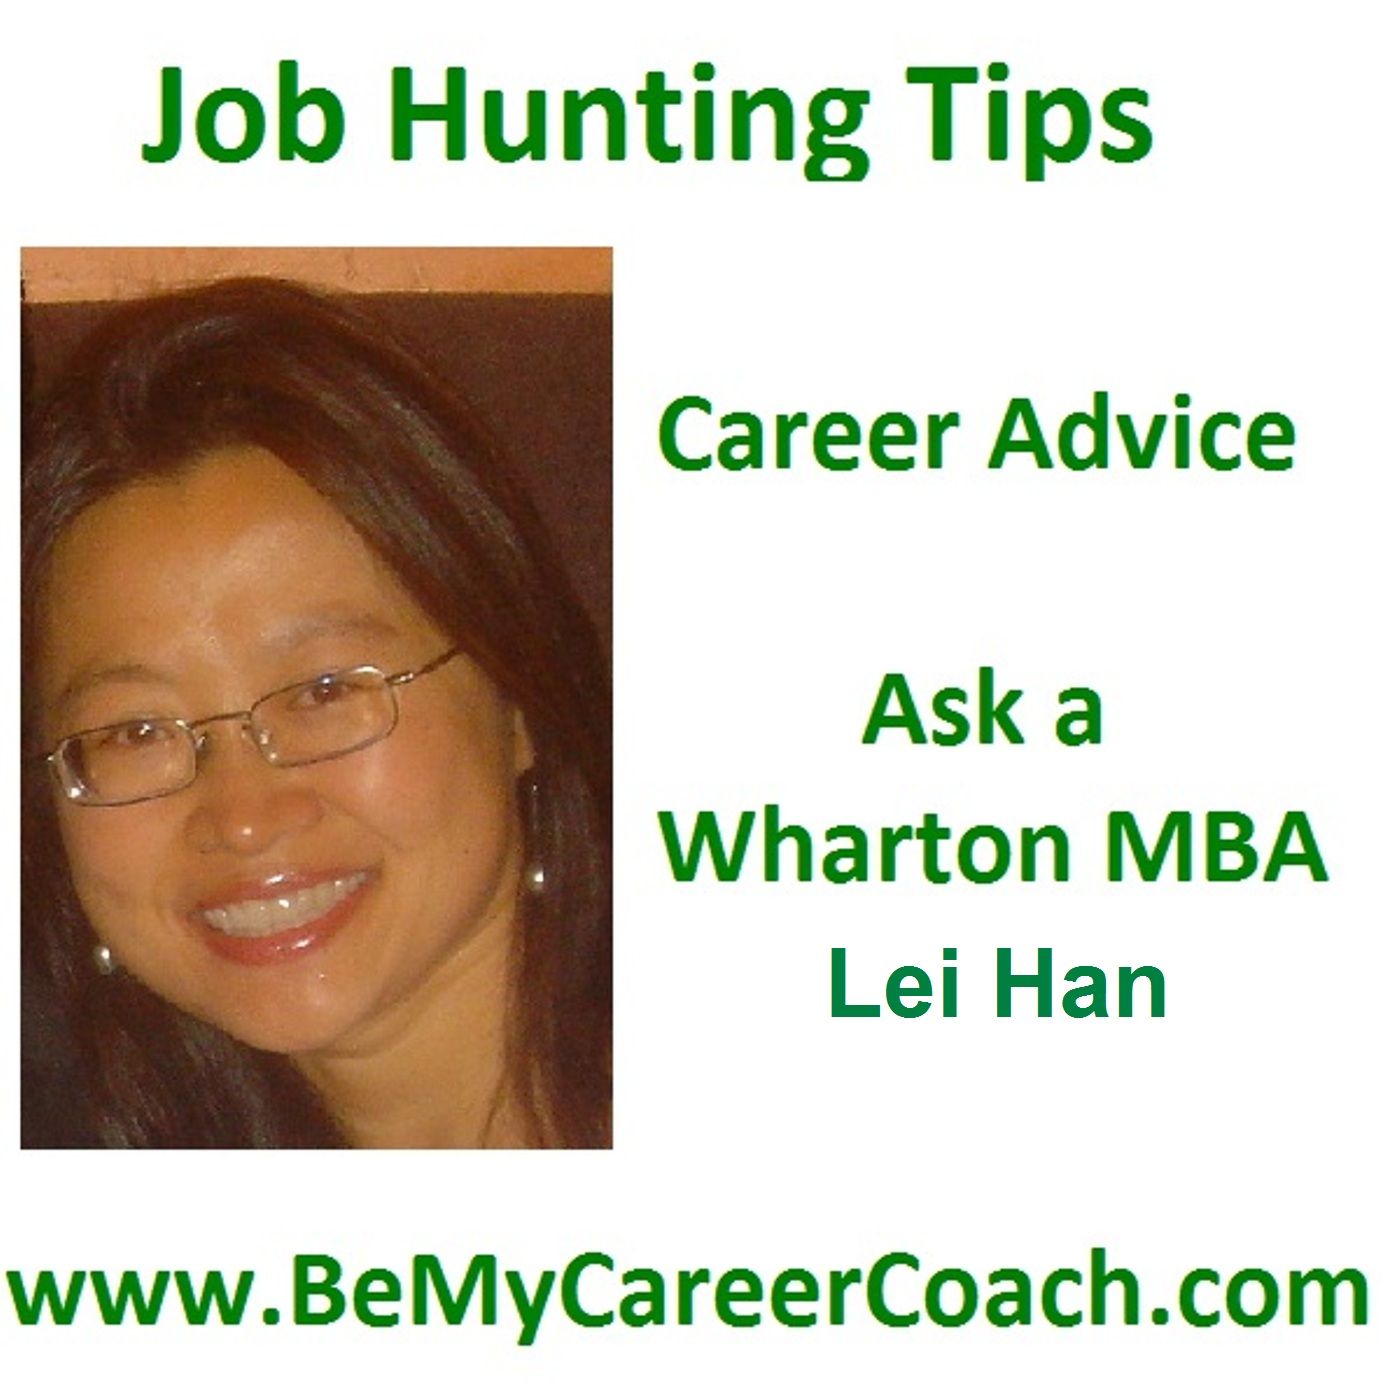 Job Hunting Tips - Soft Skills - Ask a Wharton MBA